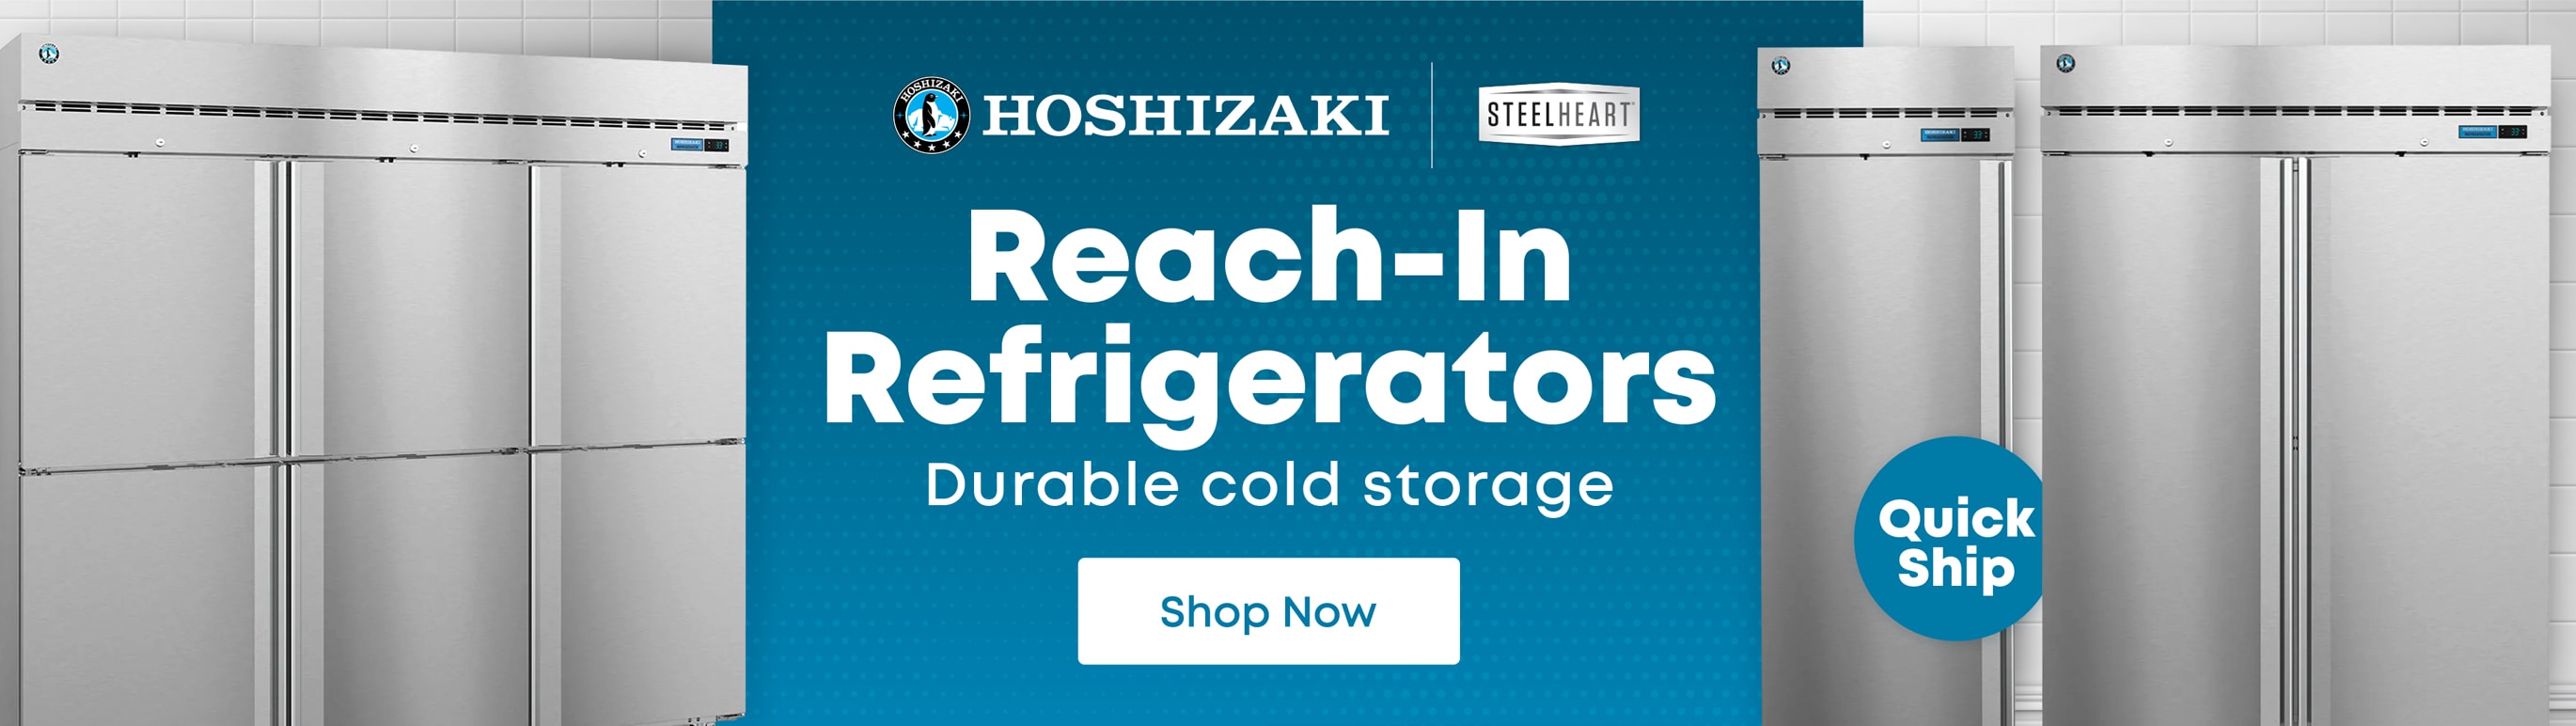 Hoshizaki Steelheart Reach-In Refrigerators